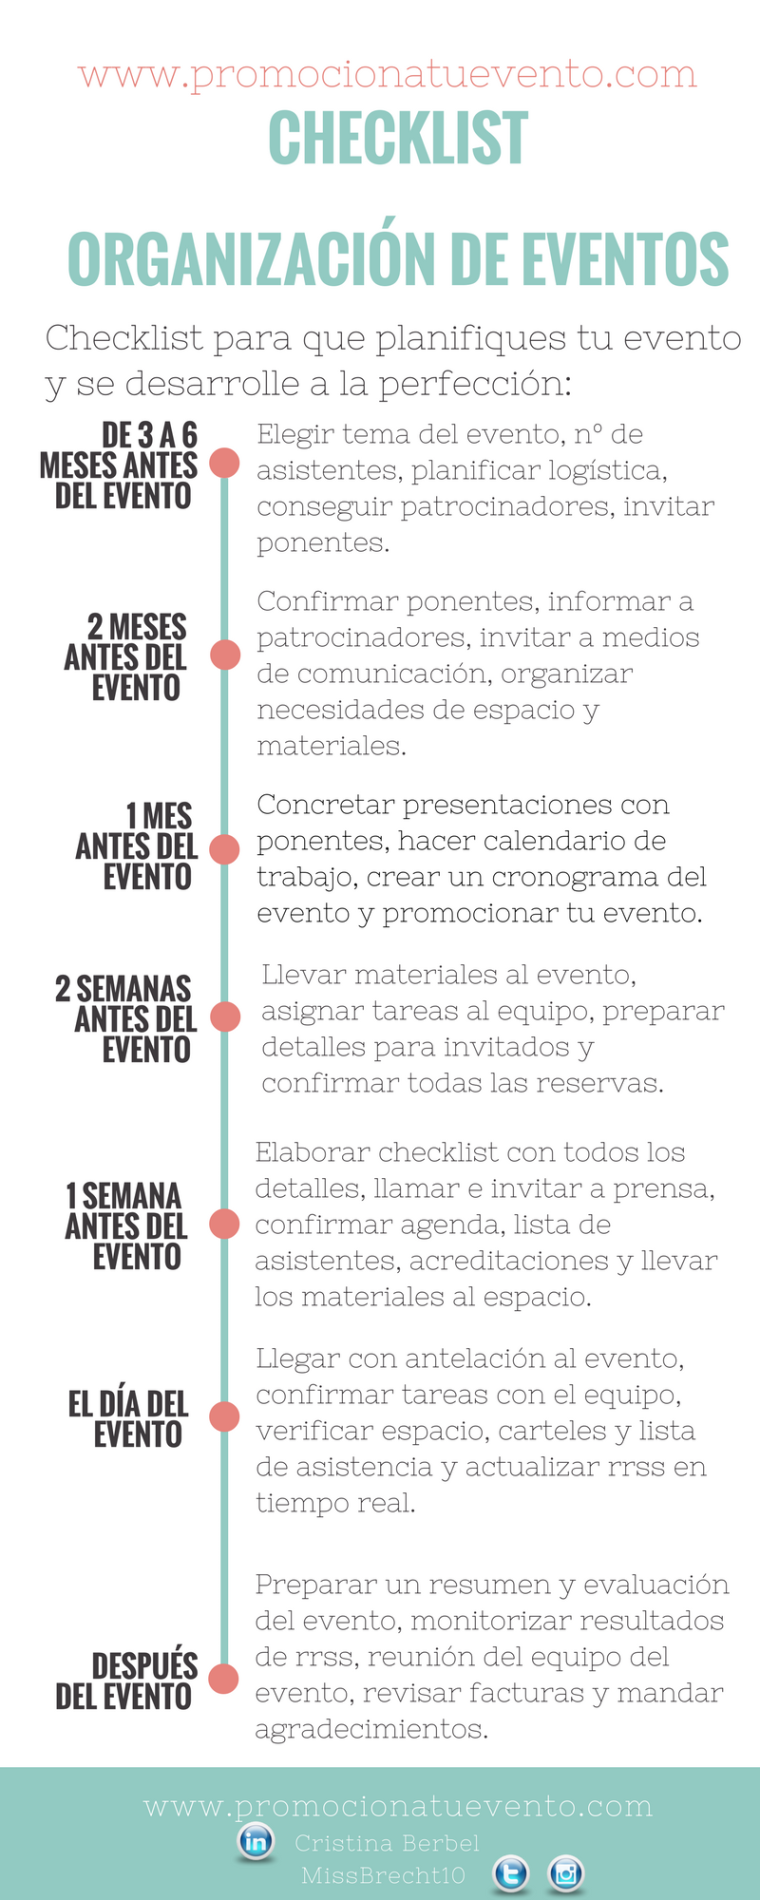 Checklist para organizar eventos